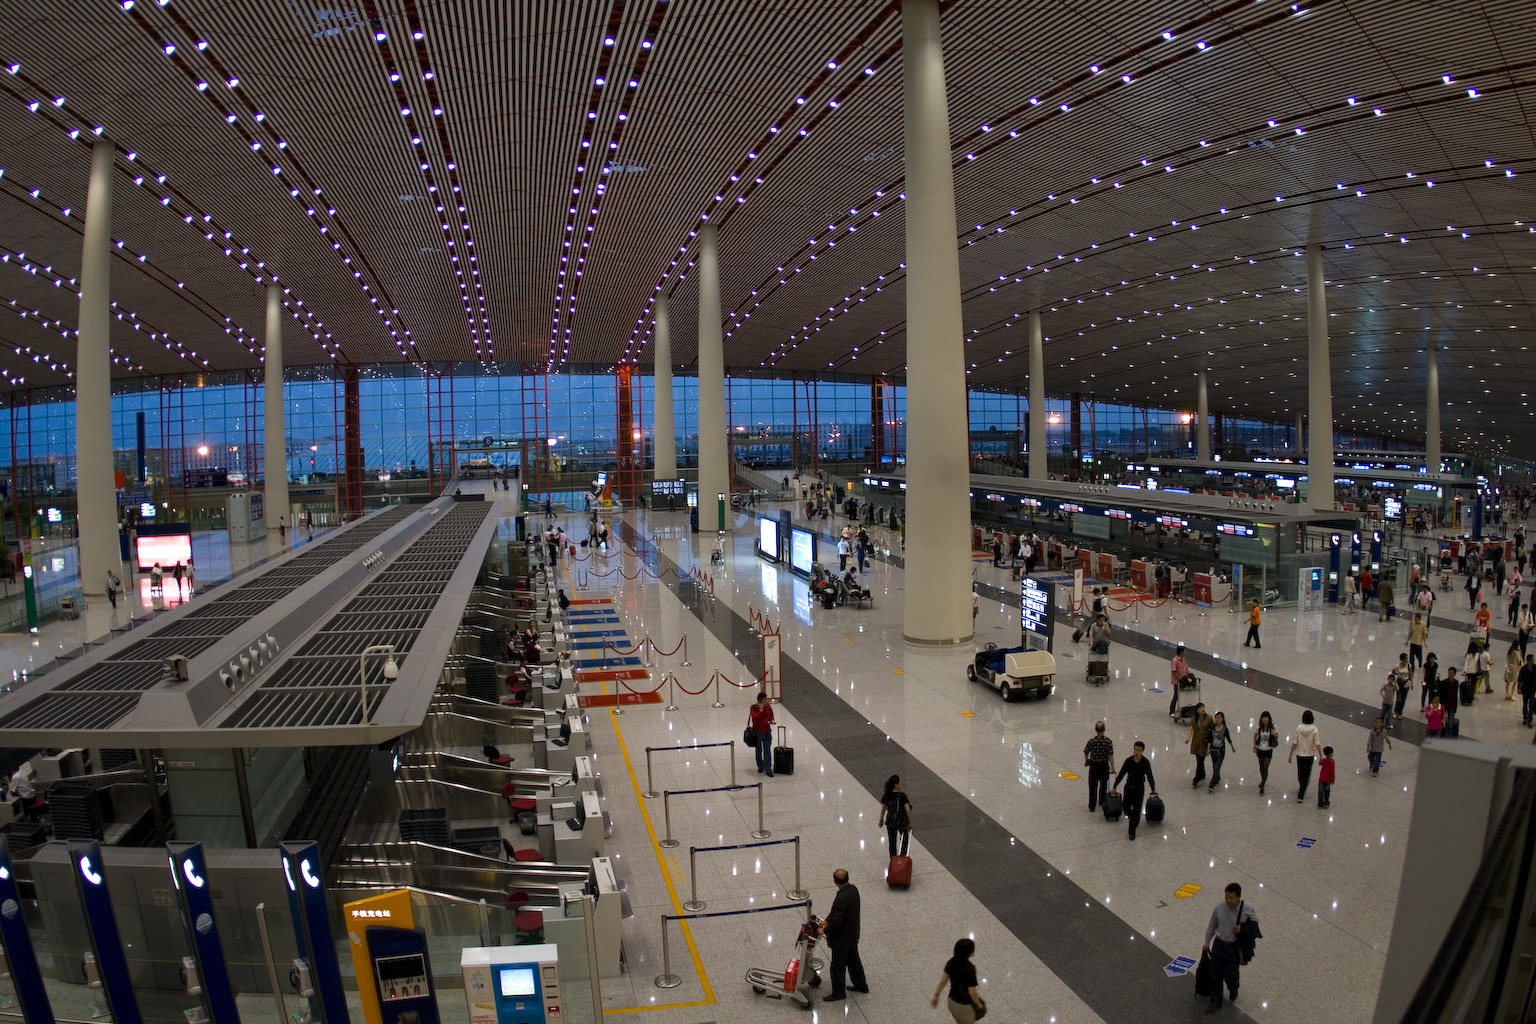 Прилет аэропорт пекин. Аэропорт Шоуду Пекин. Международный аэропорт Шоуду в Пекине (Китай). Аэропорт Пекина Шоуду терминал 2. Аэропорт Пекин столичный терминал 3.